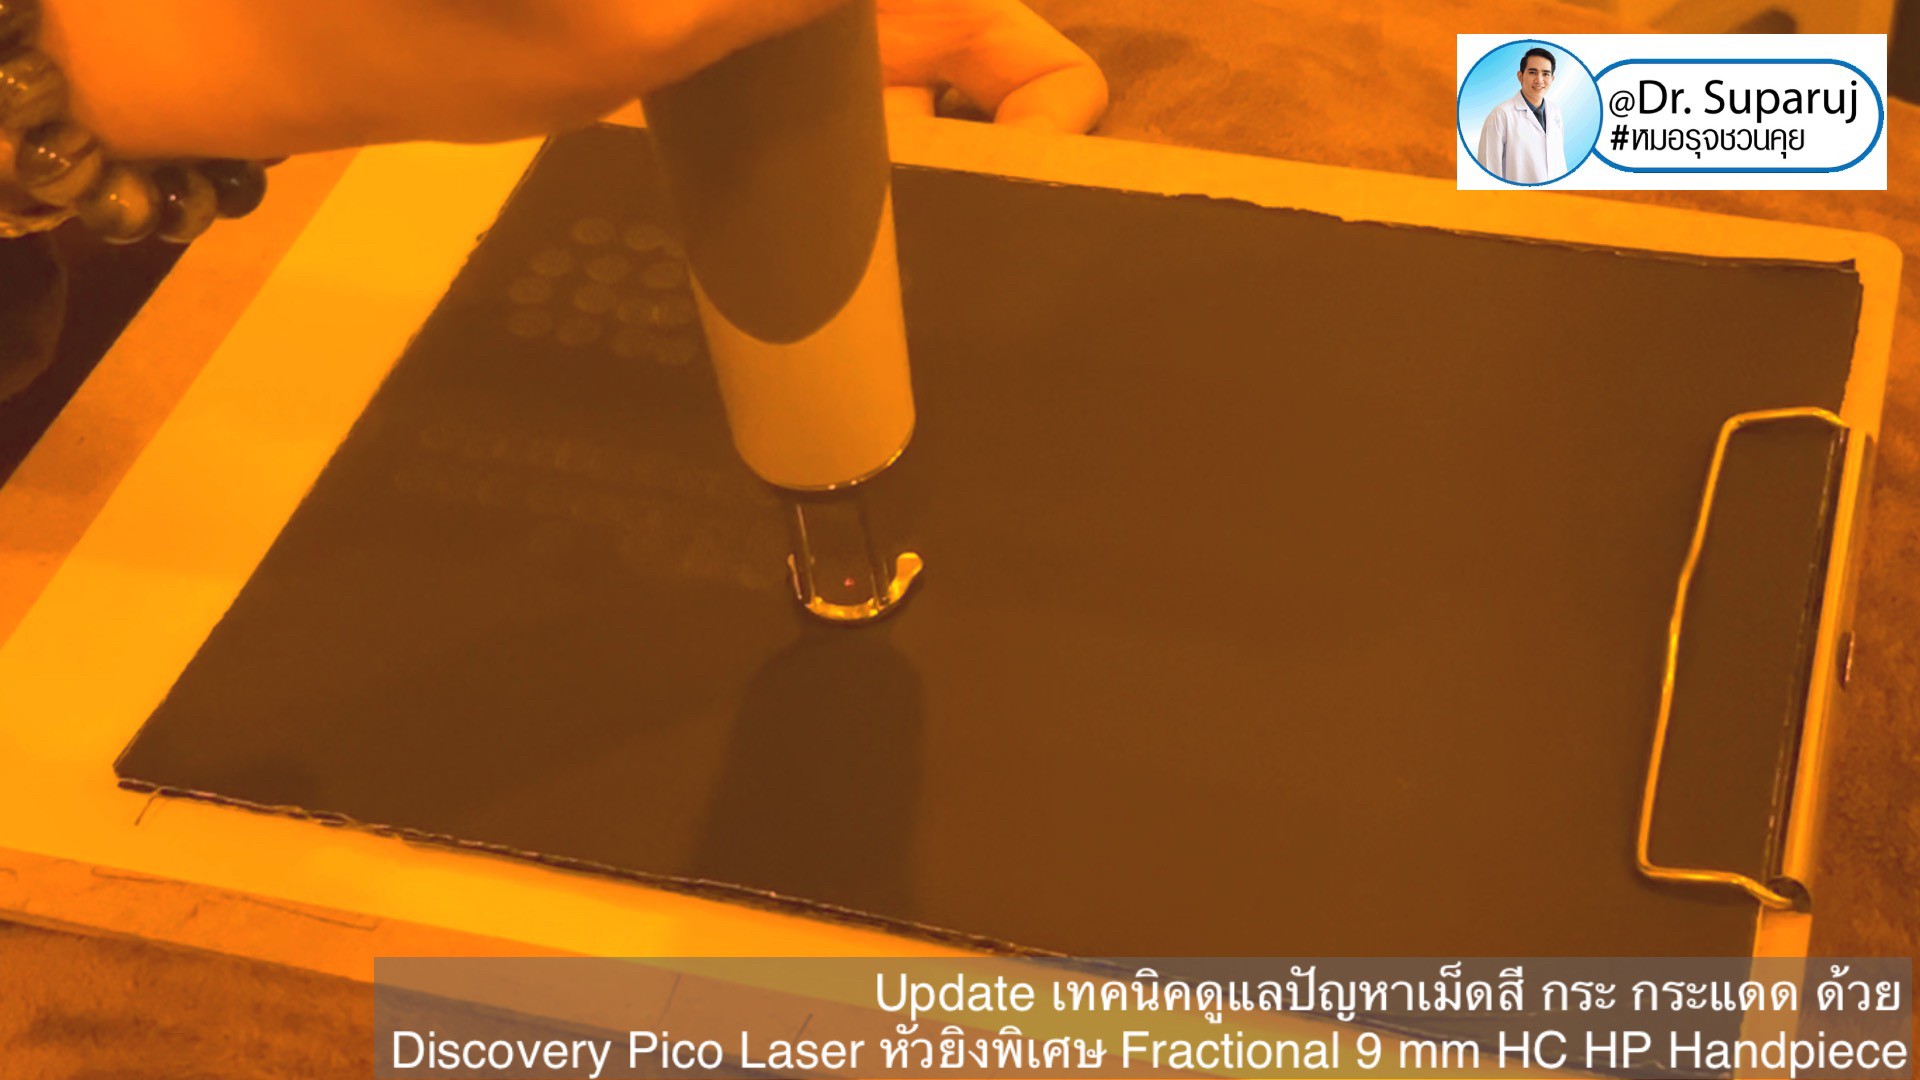 Update เทคนิคดูแลปัญหาเม็ดสี กระ กระแดด ด้วย Discovery Pico Laser หัวยิงเลเซอร์พิเศษ Fractional 9 mm HC HP Handpiece